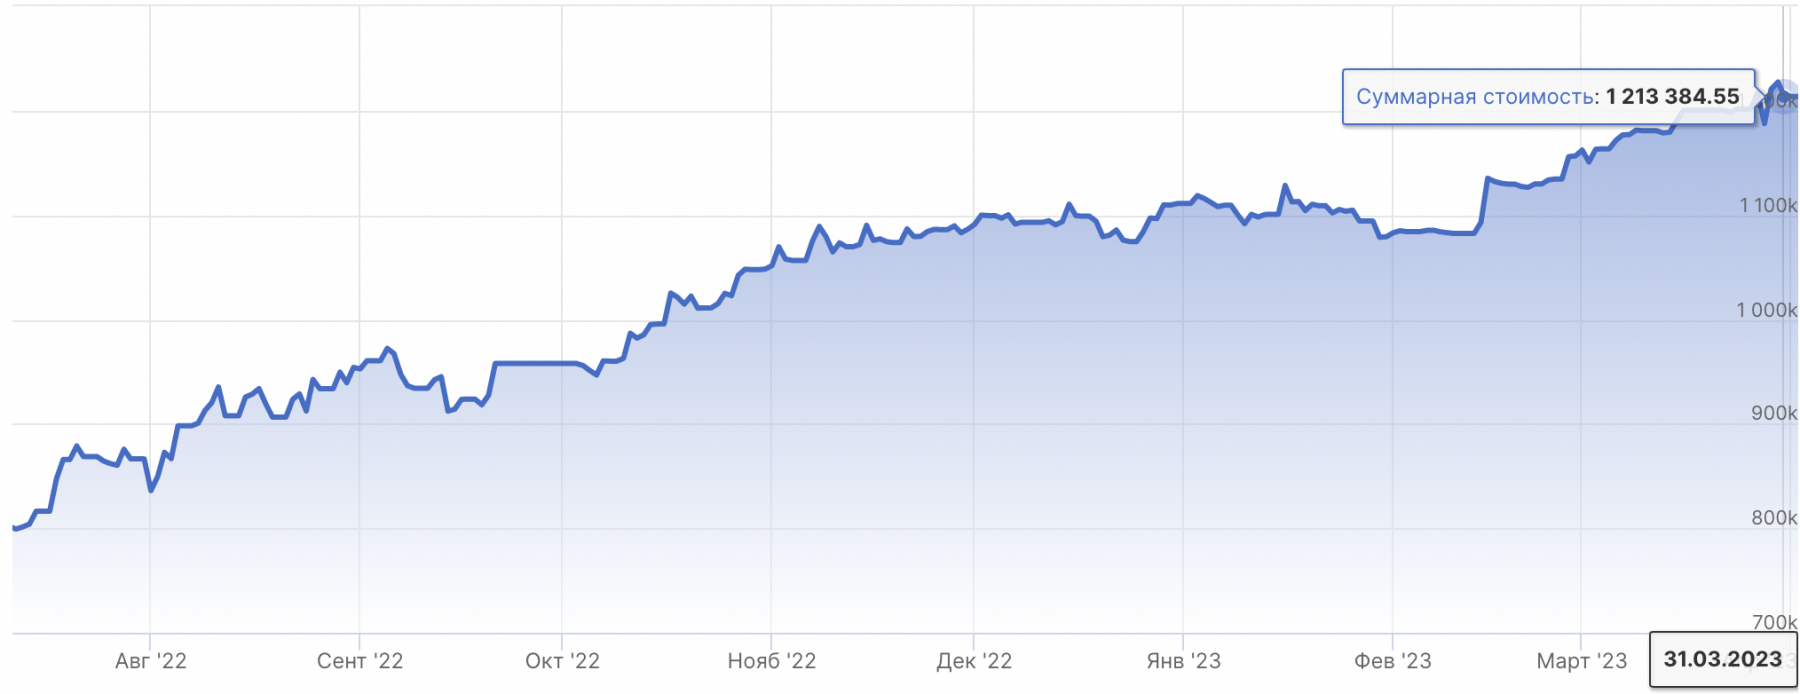 Итоги недели на рынке акций РФ: +11 655 руб.